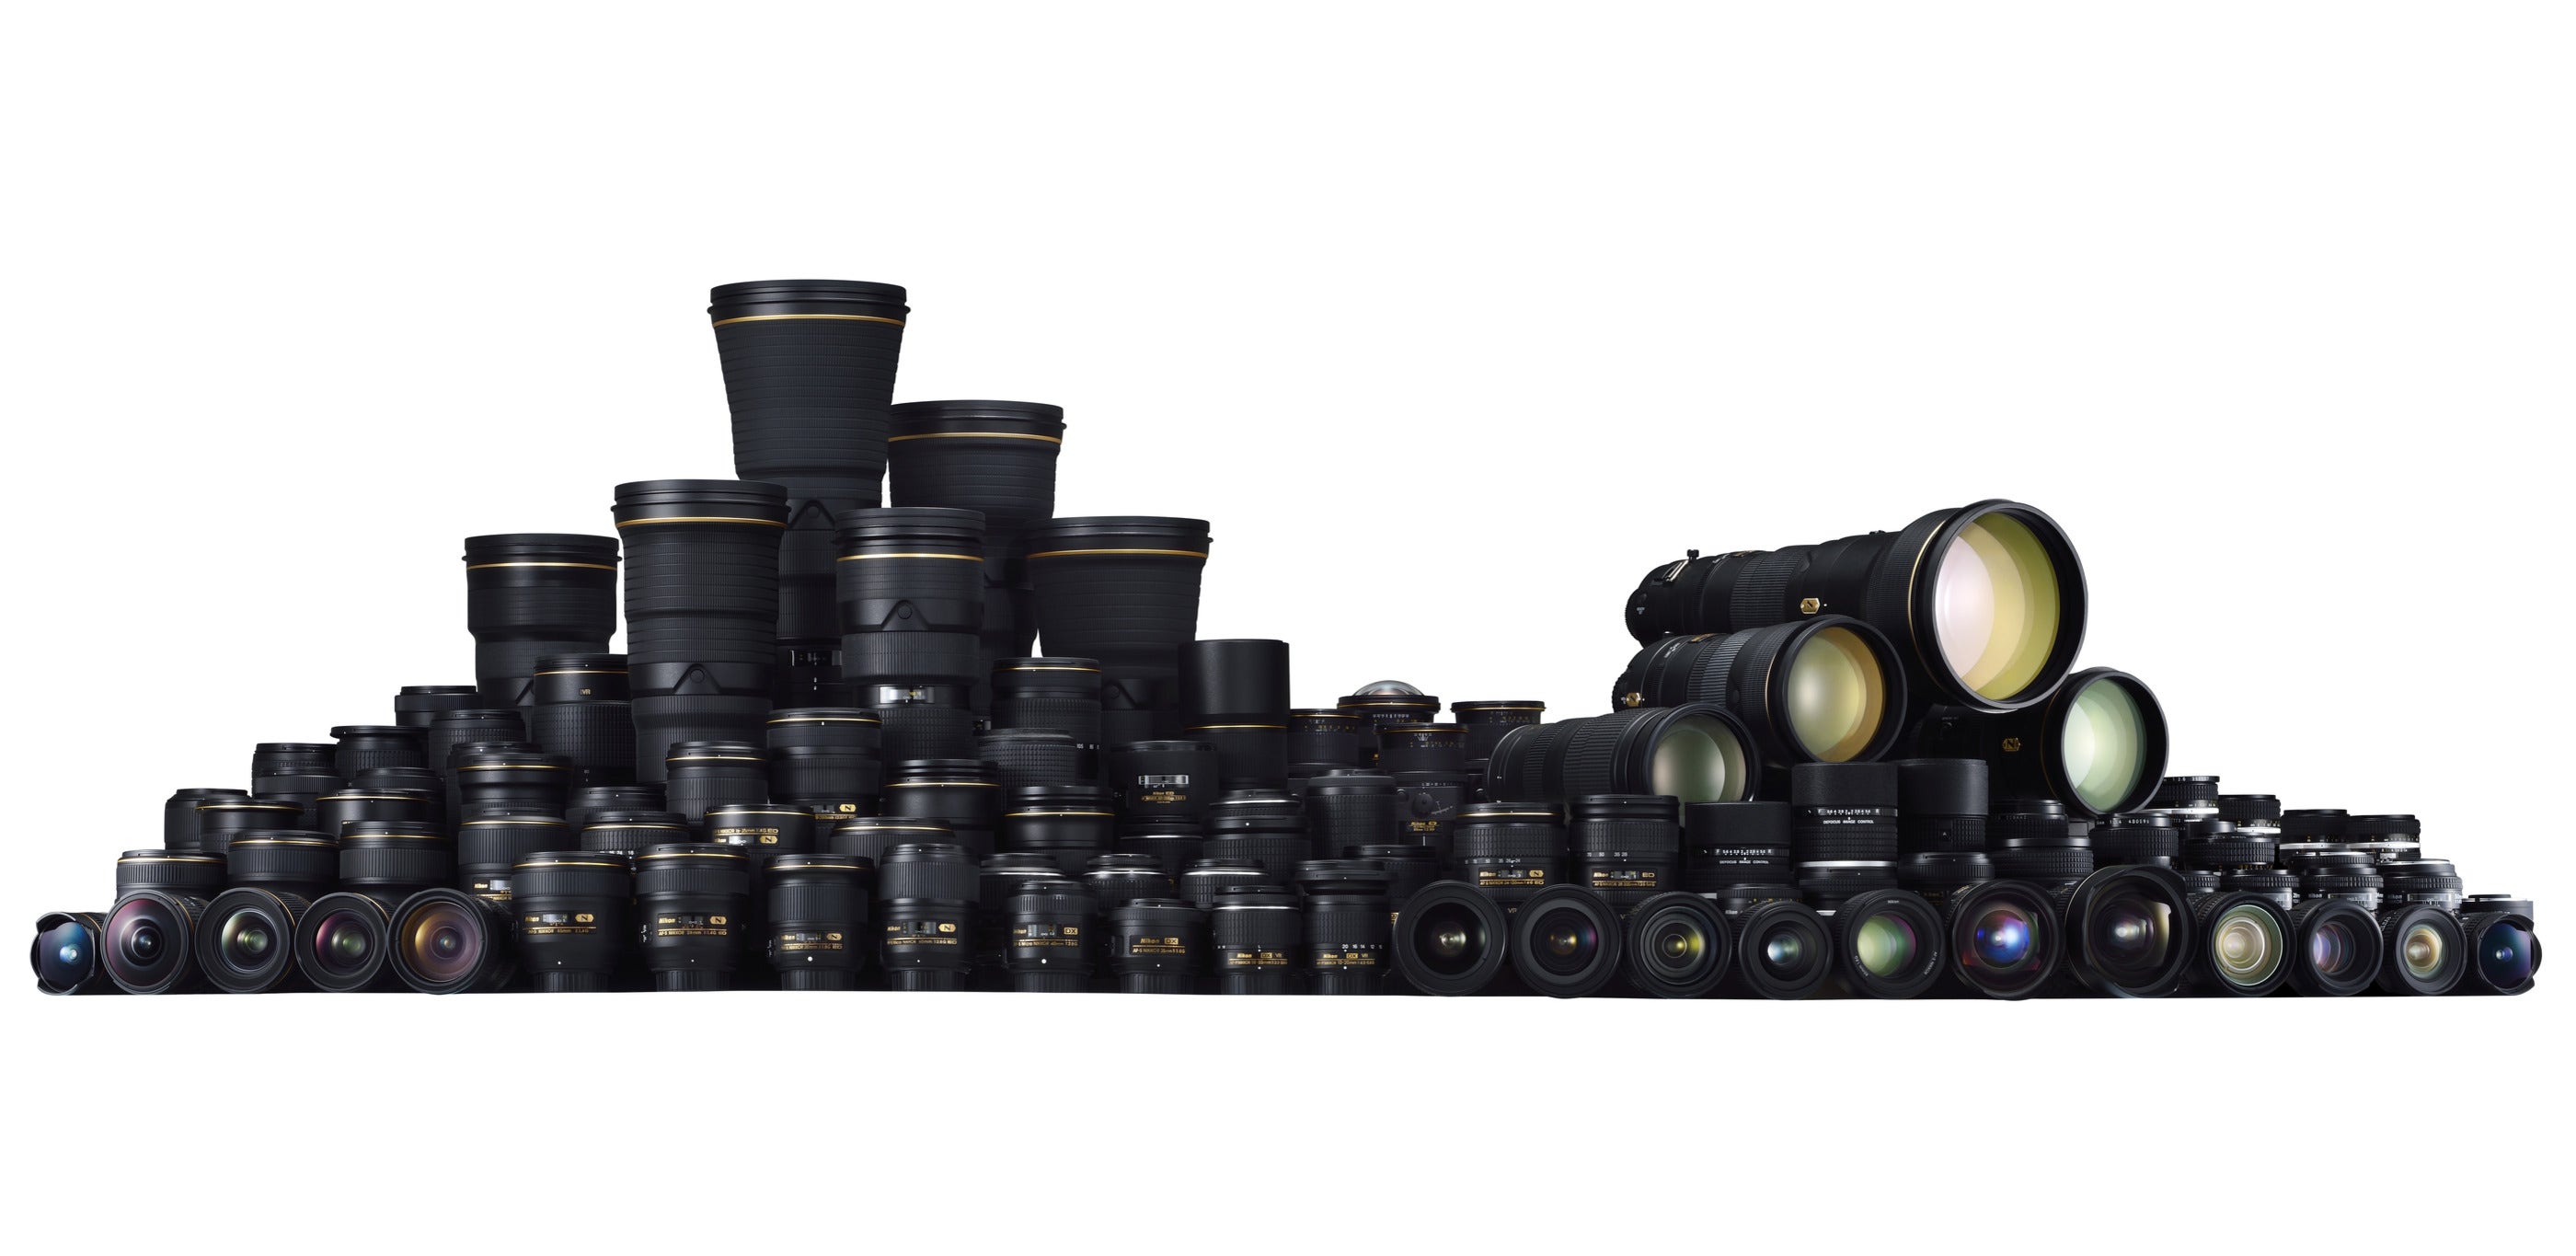 NIKKOR F DSLR Lense Range | Nikon Cameras, Lenses & Accessories